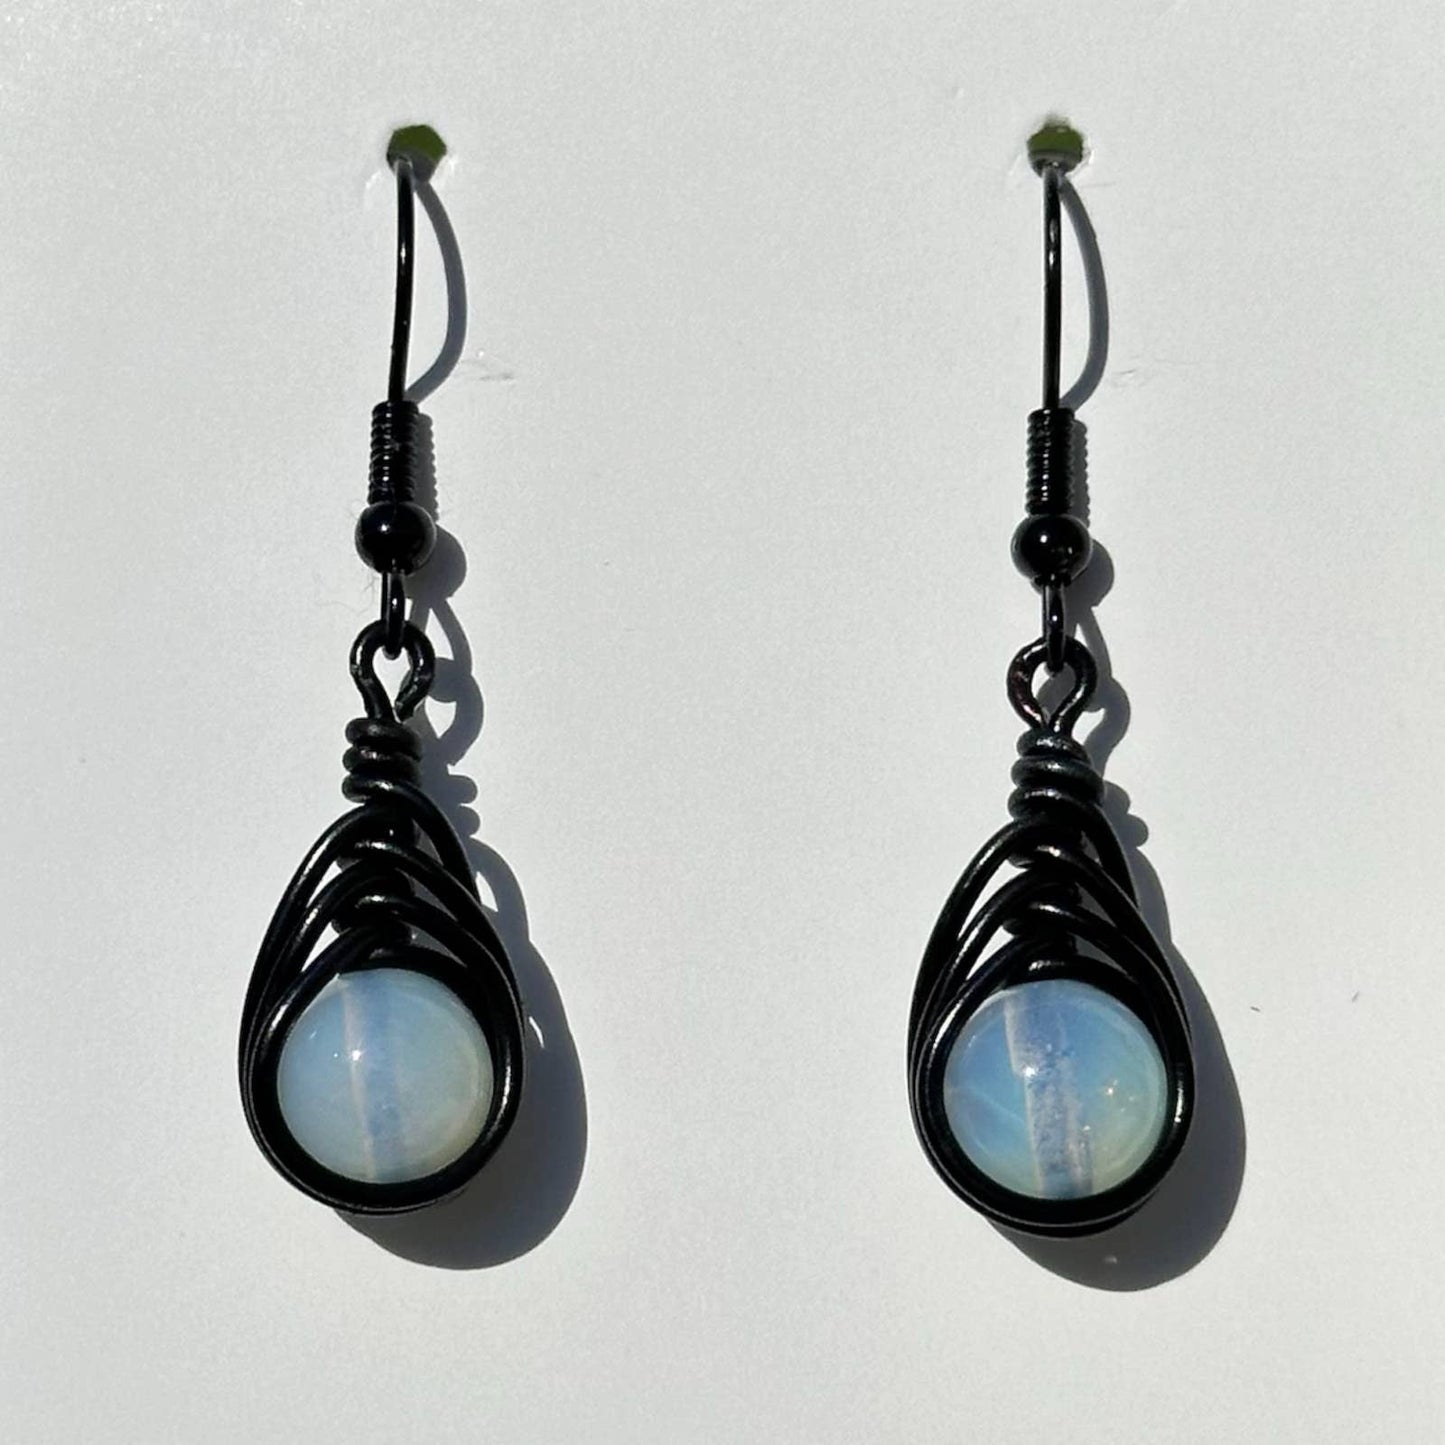 Handmade Opalescent Moonstone Black Wire-Wrapped Earrings